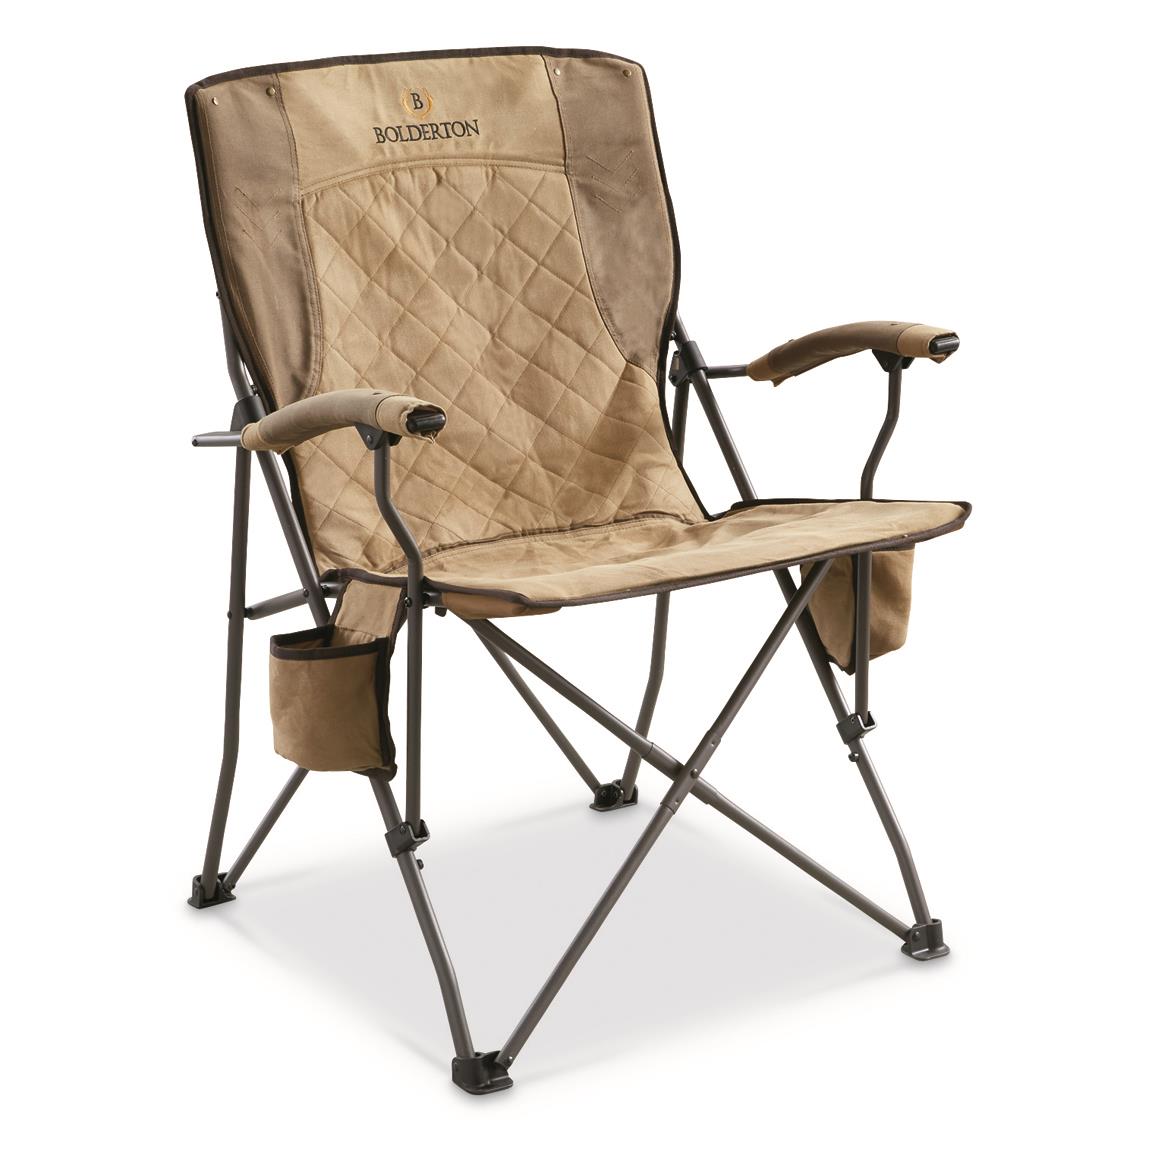 Bolderton Heritage Oversized Deck Chair, 500-lb. Capacity